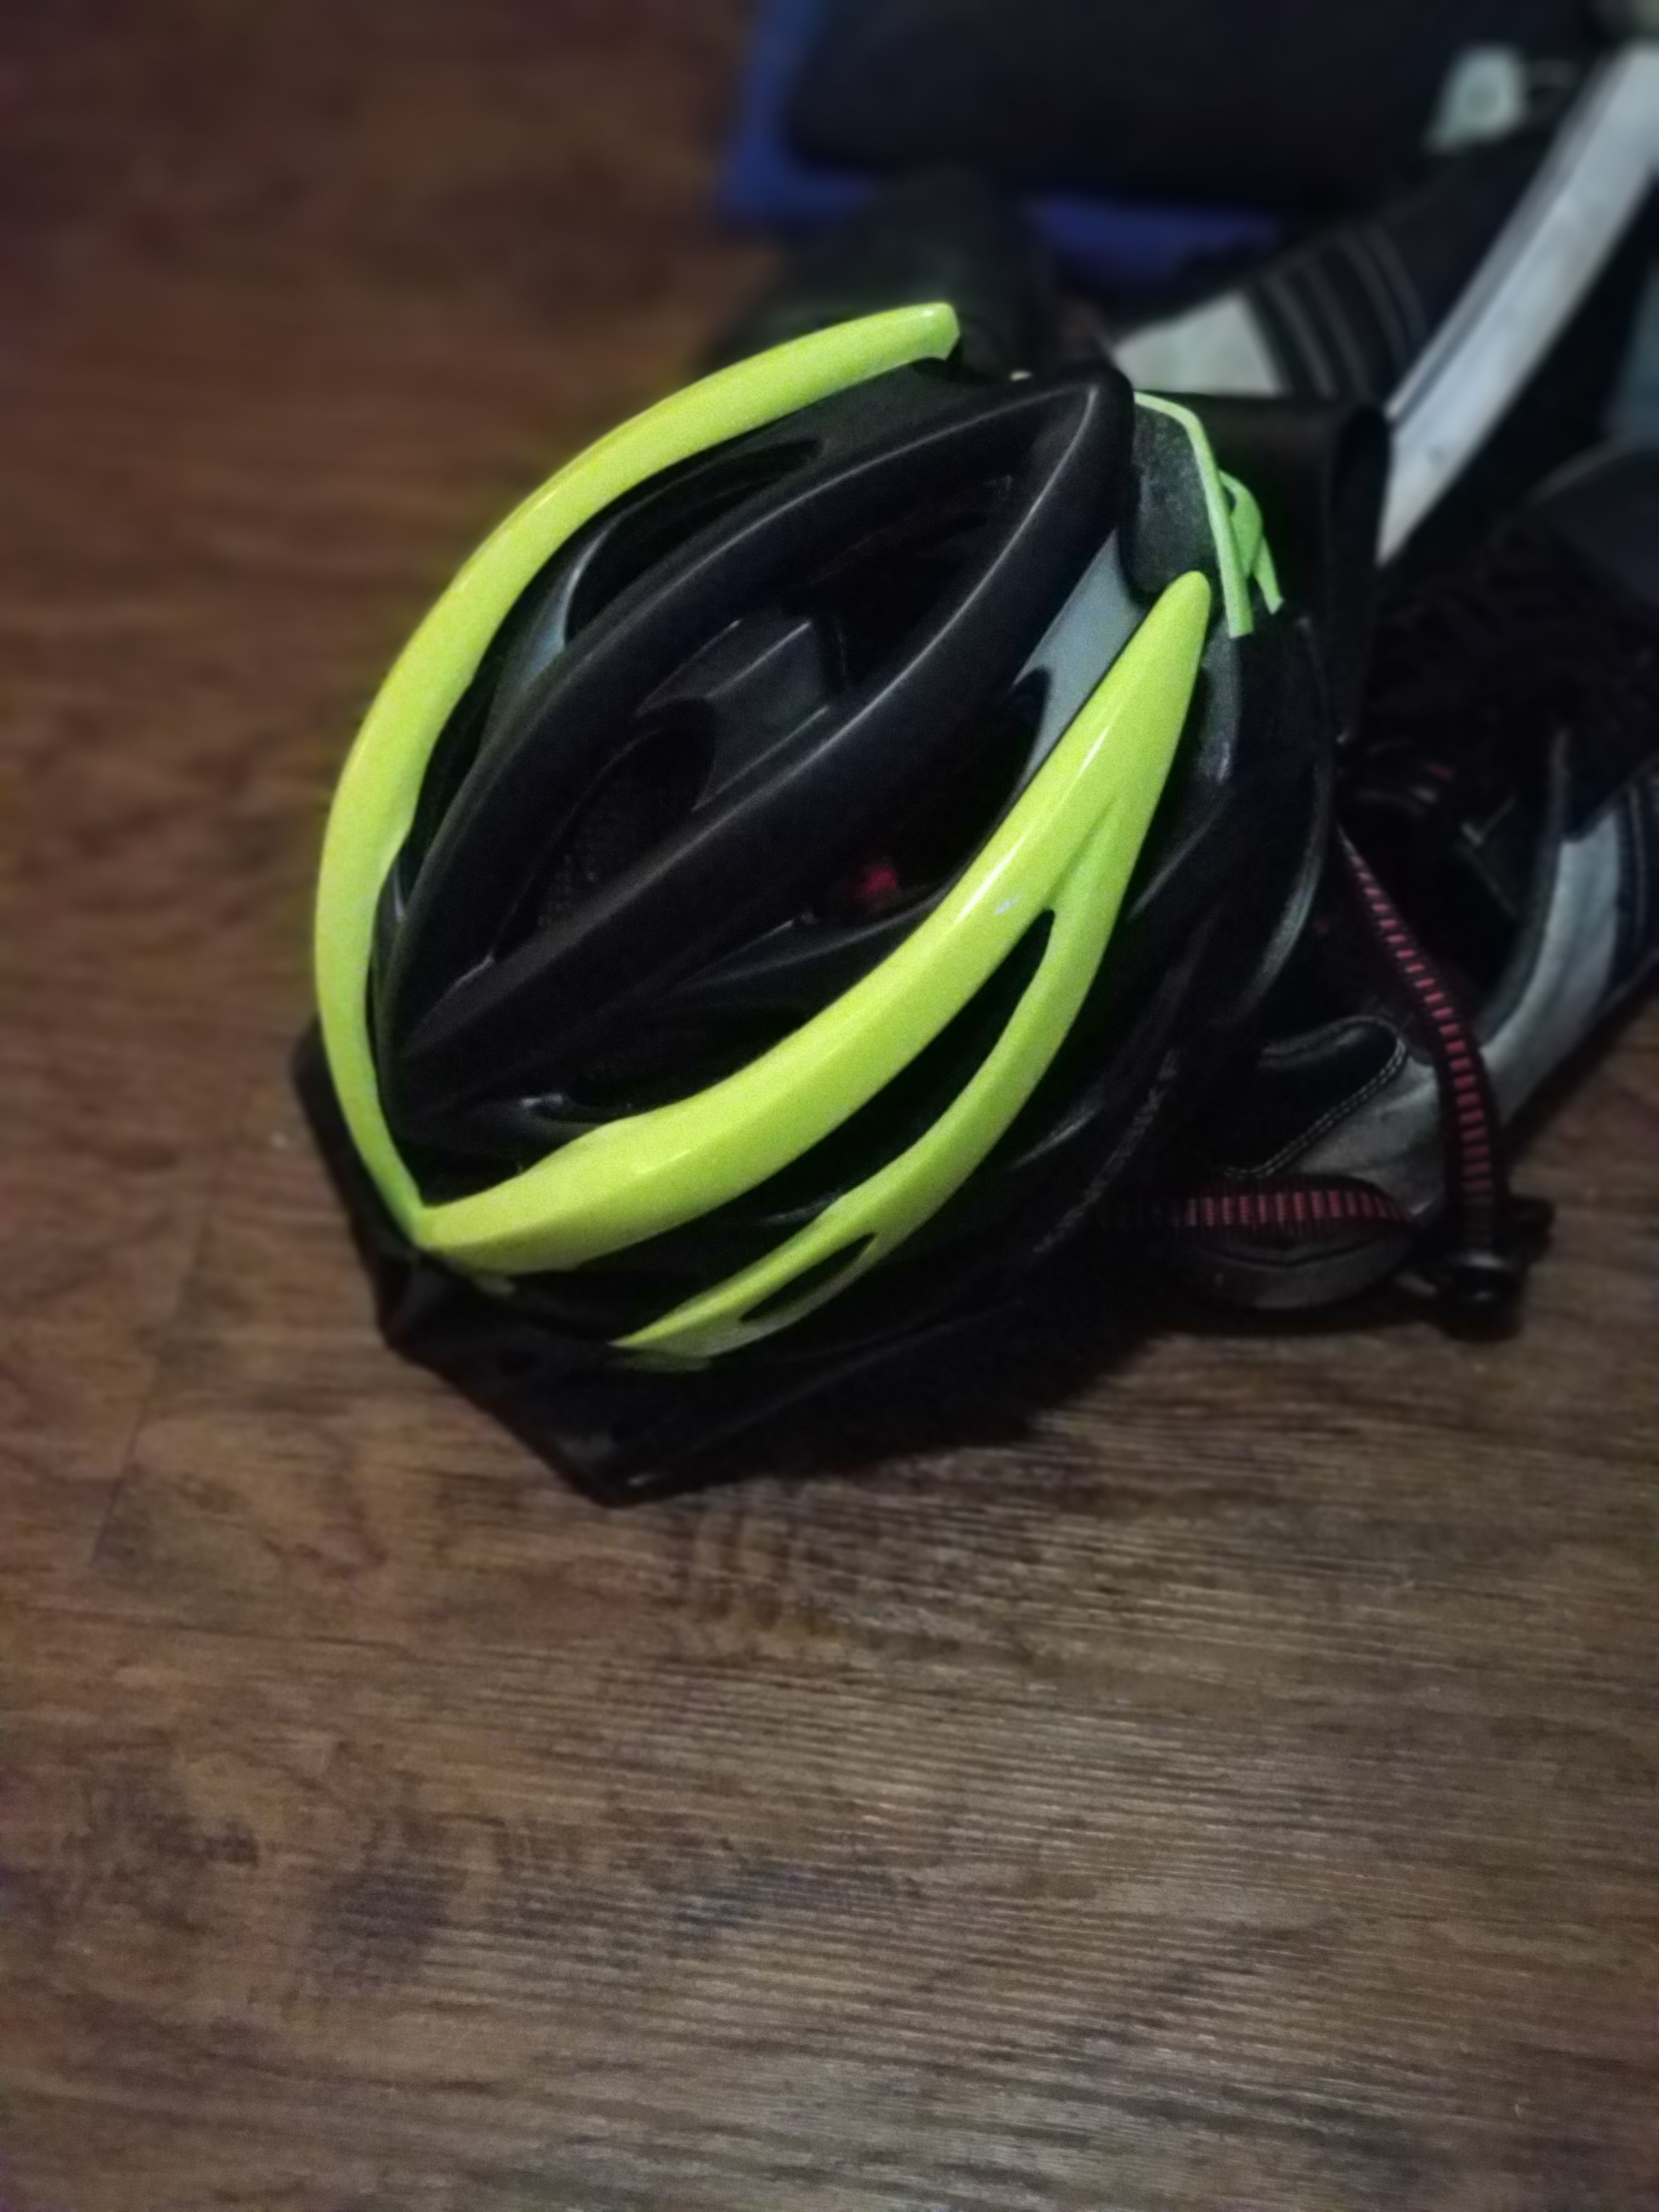 Brand new biking helmet!!!